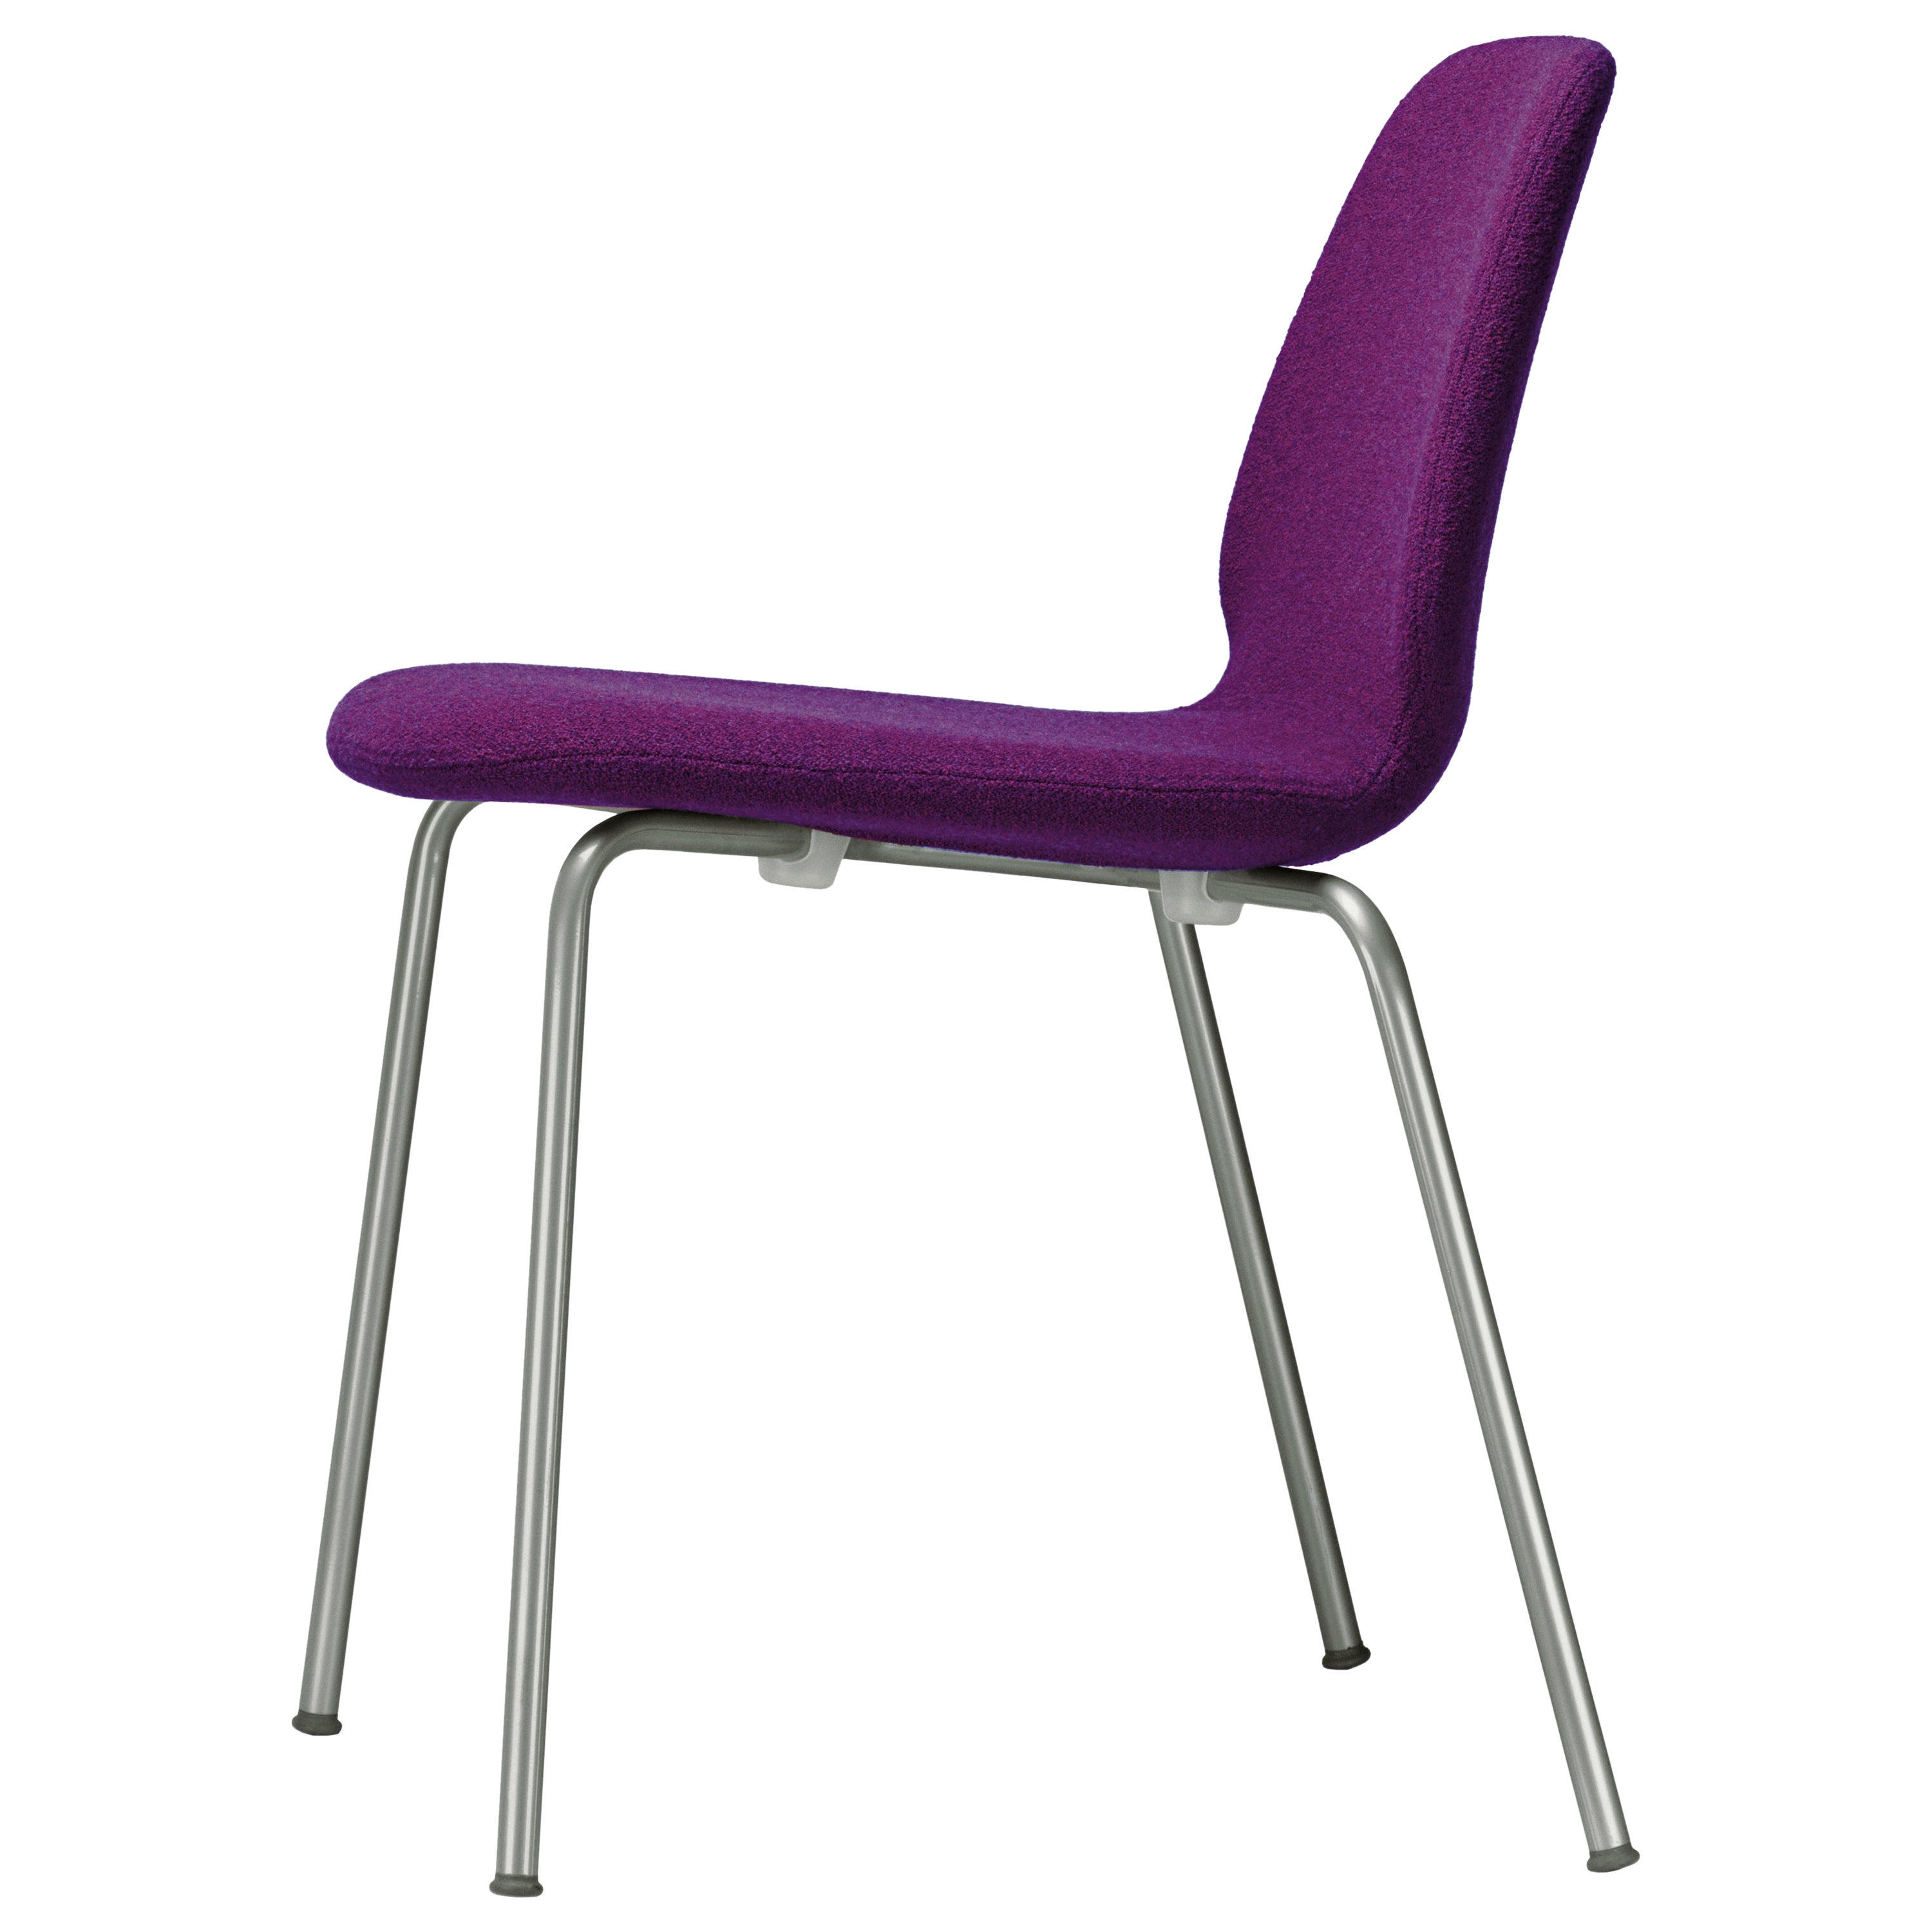 Alias 516 Tindari Chair in Violet Seat & Chromed Steel Frame by Alfredo Häberli For Sale